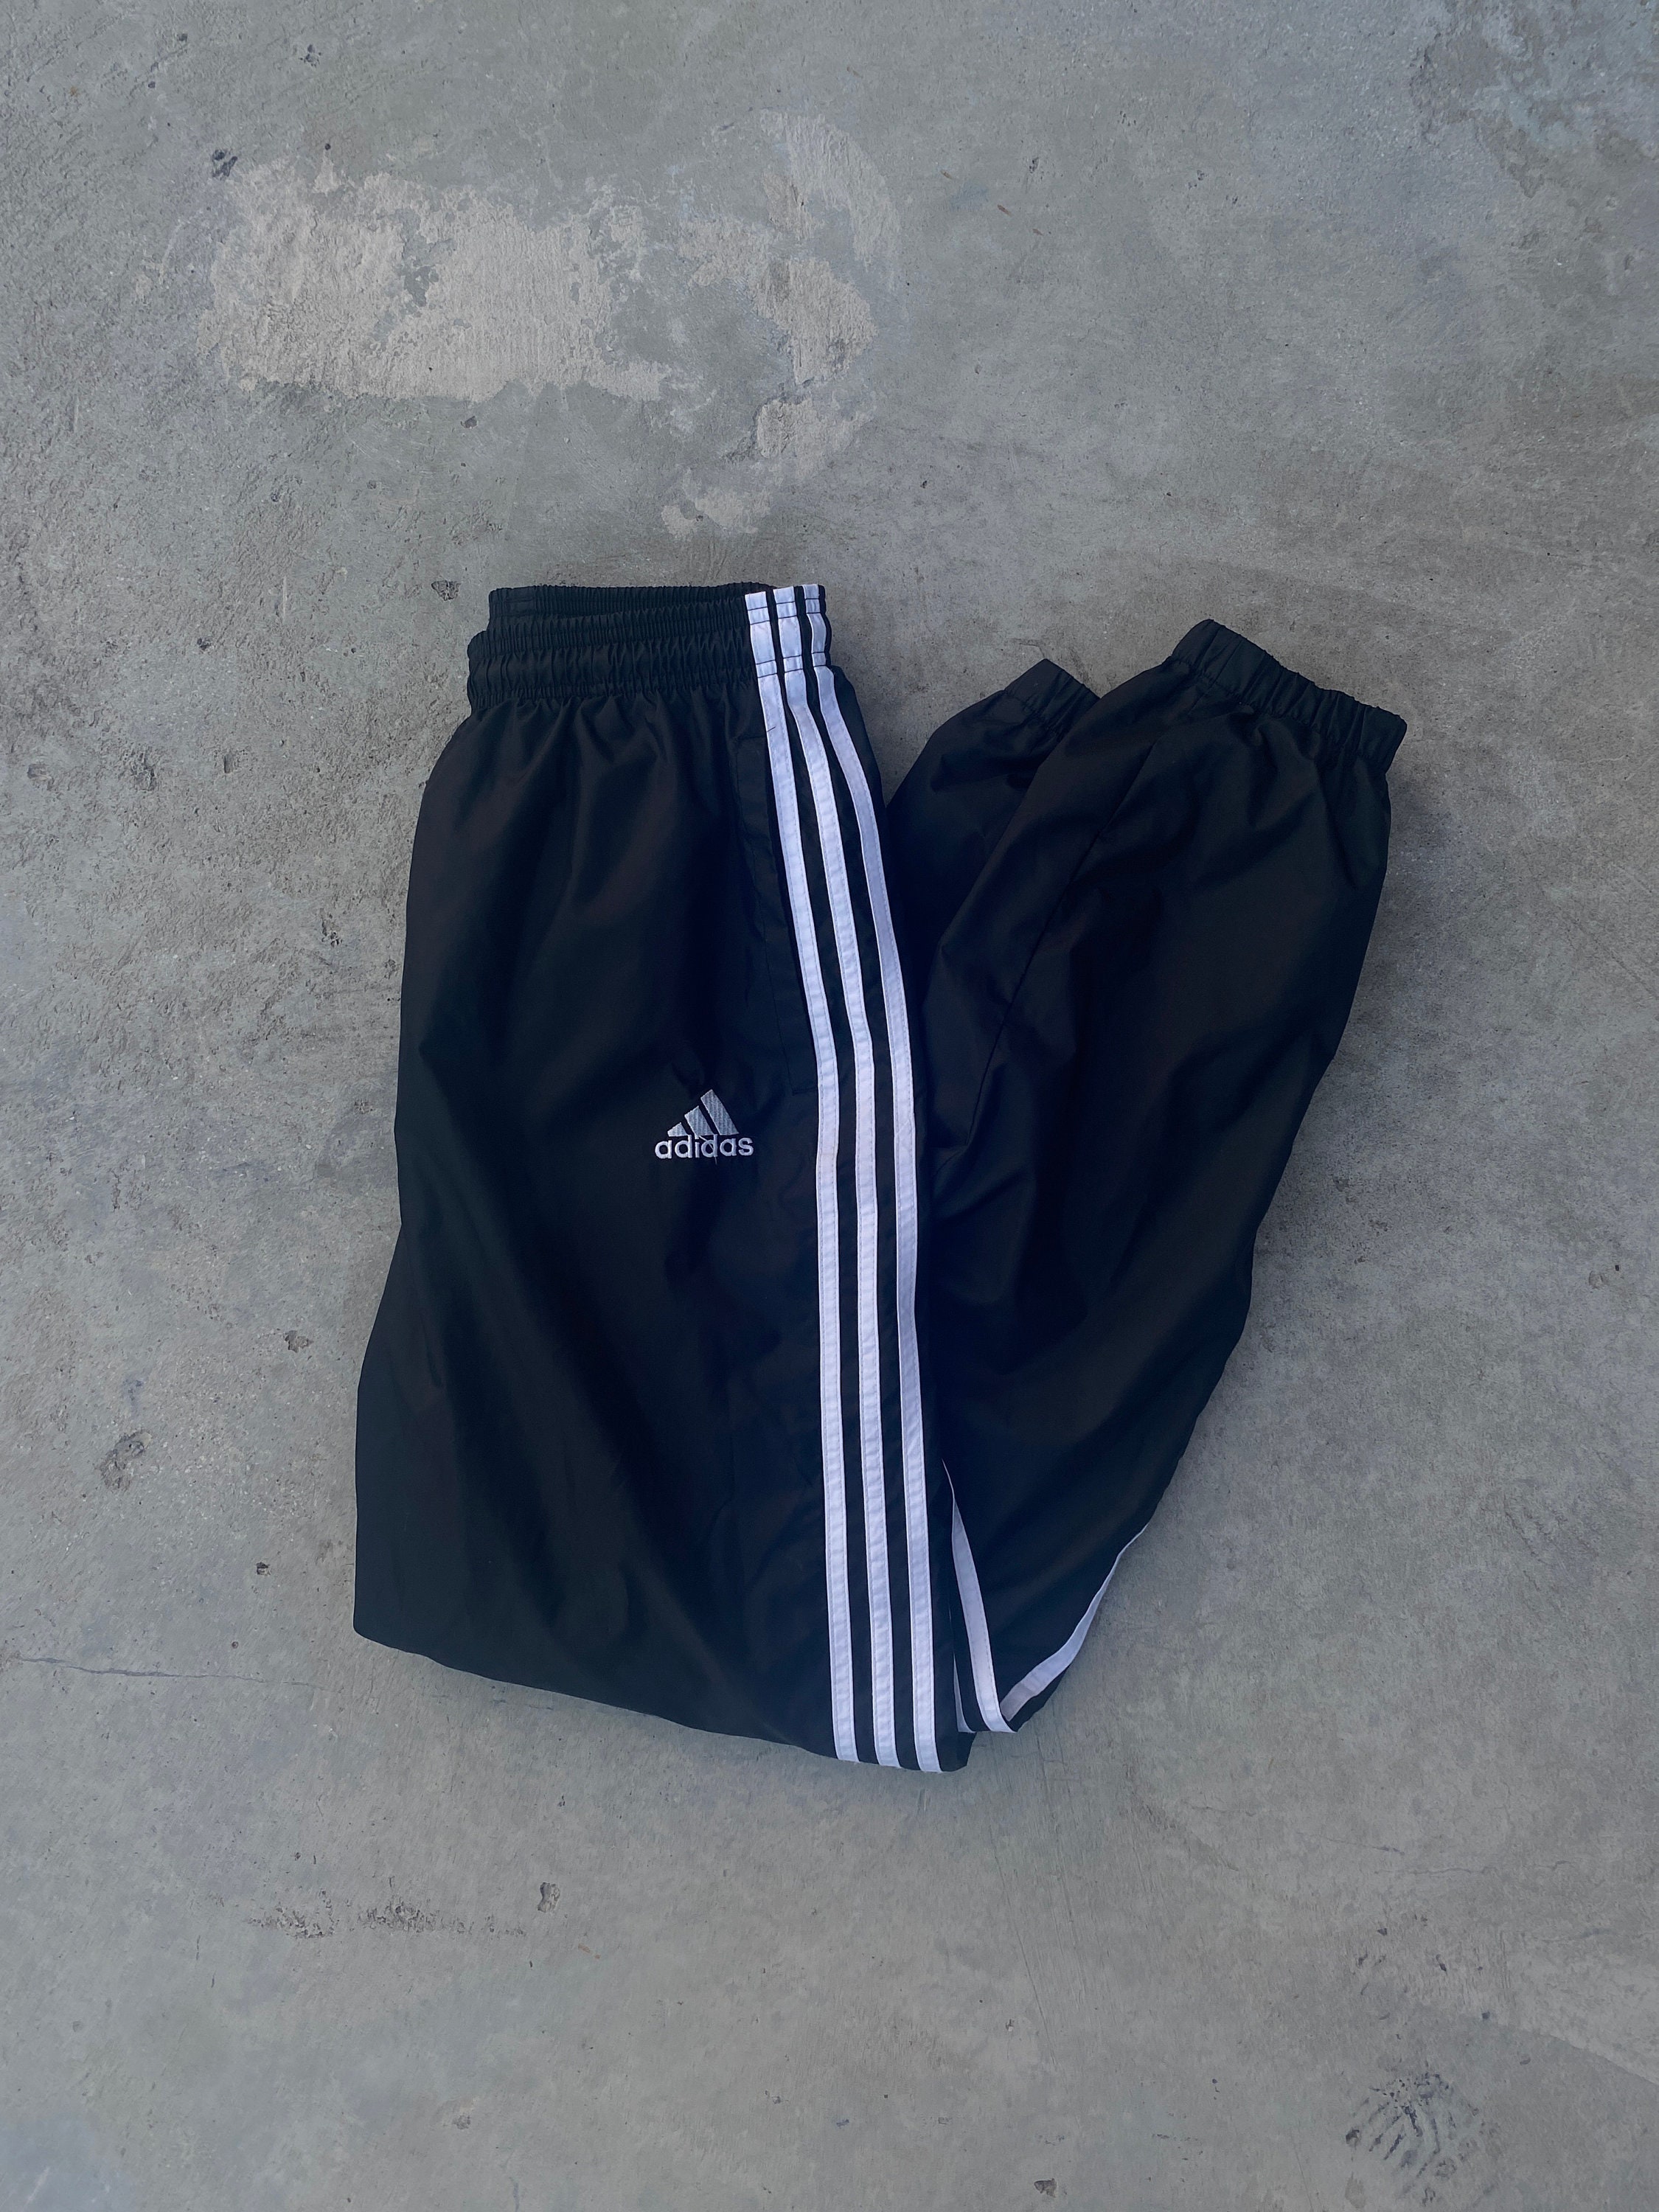 VINTAGE 90s Adidas Adibreak Tear Away Track Pants Black White Embroidered  sz L  eBay